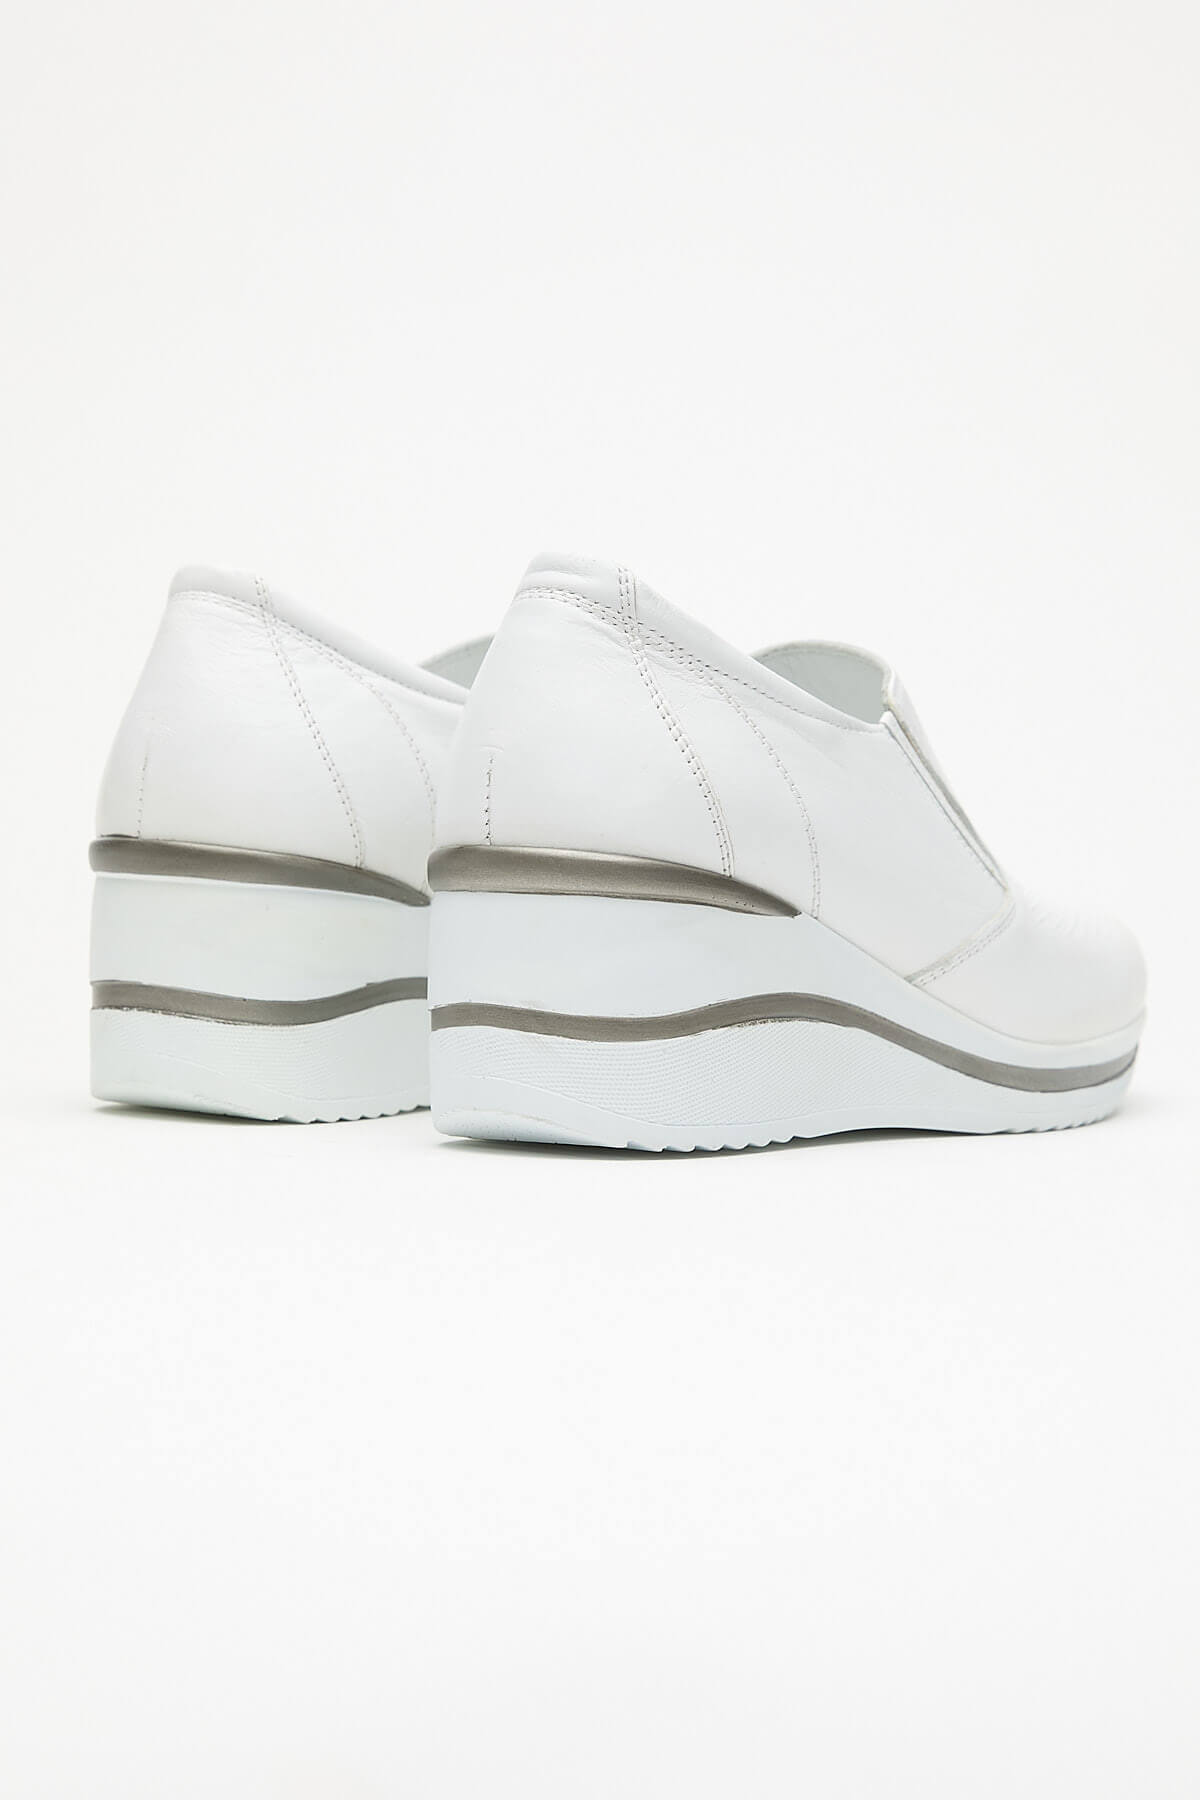 Kadın Dolgu Topuk Deri Sneakers Beyaz 2111501Y - Thumbnail